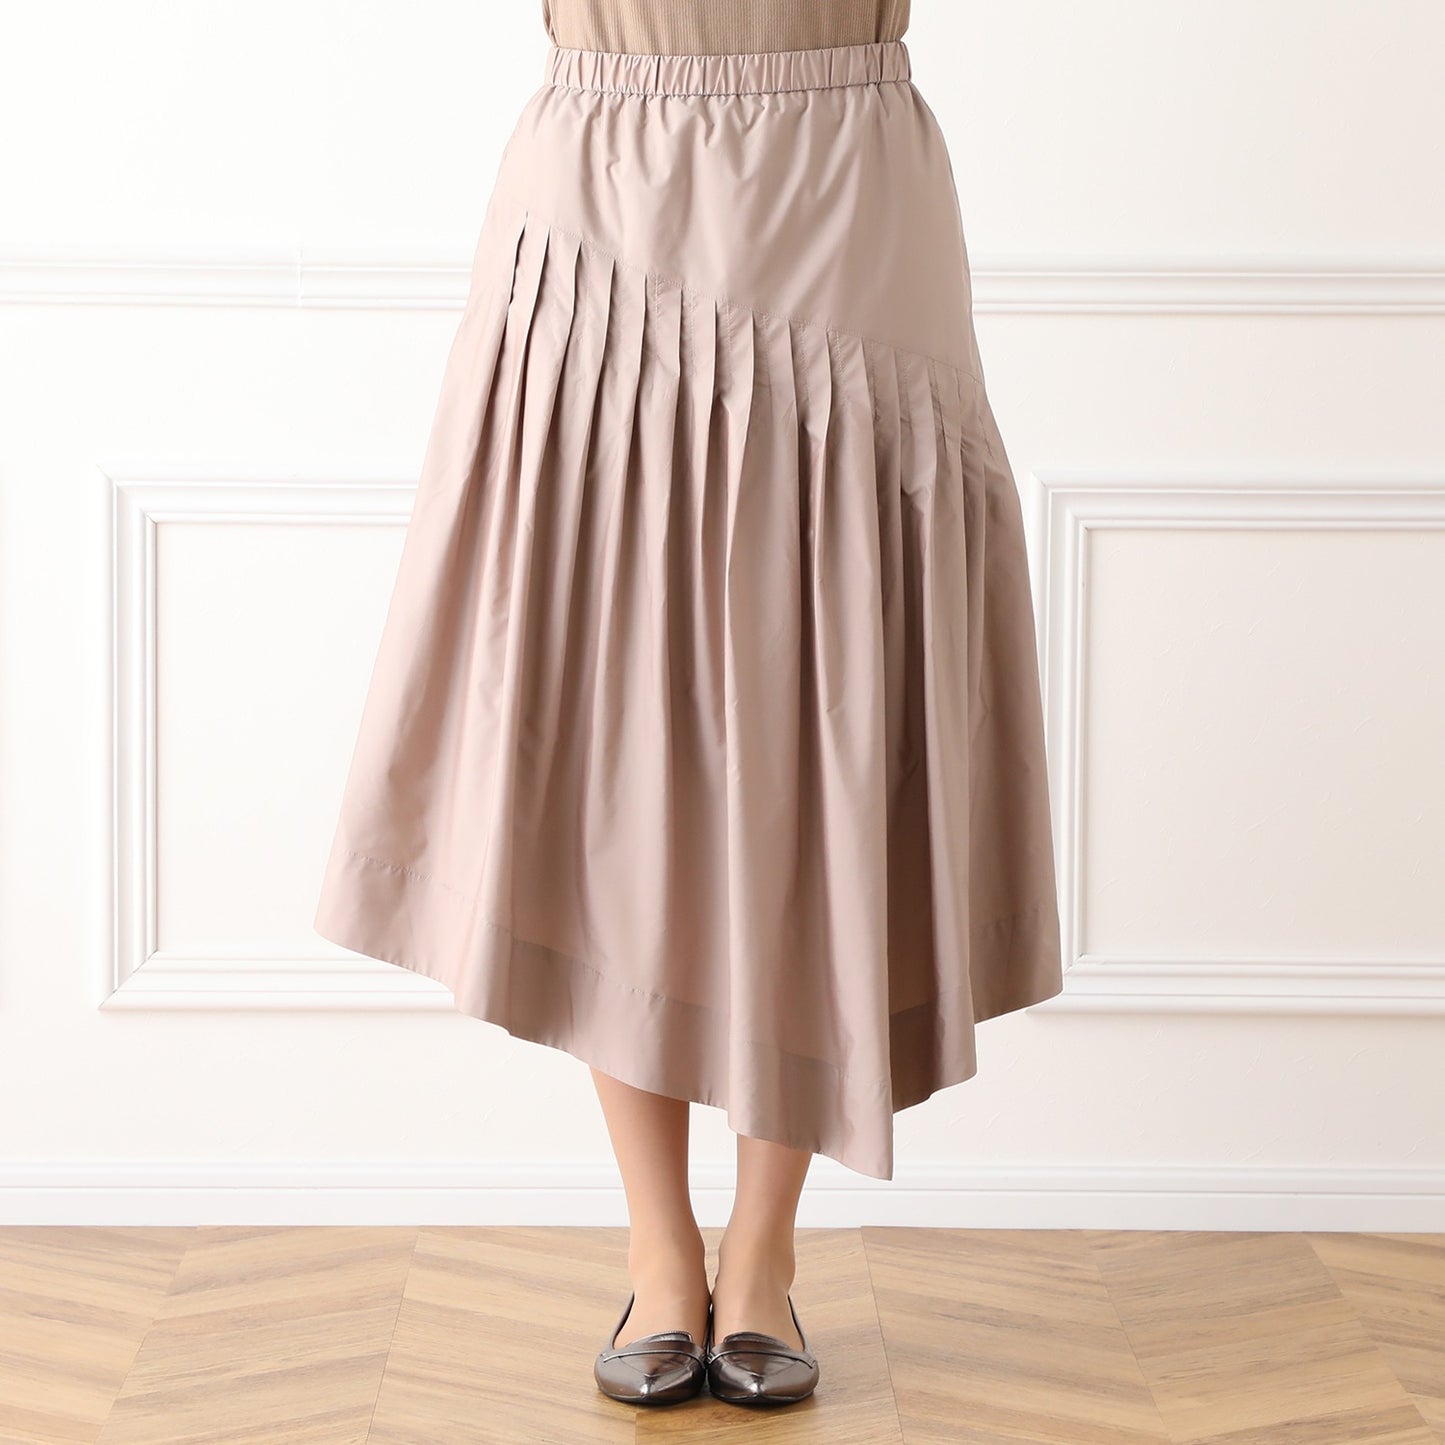 Pintuck Skirt in Blush Beige Taffeta